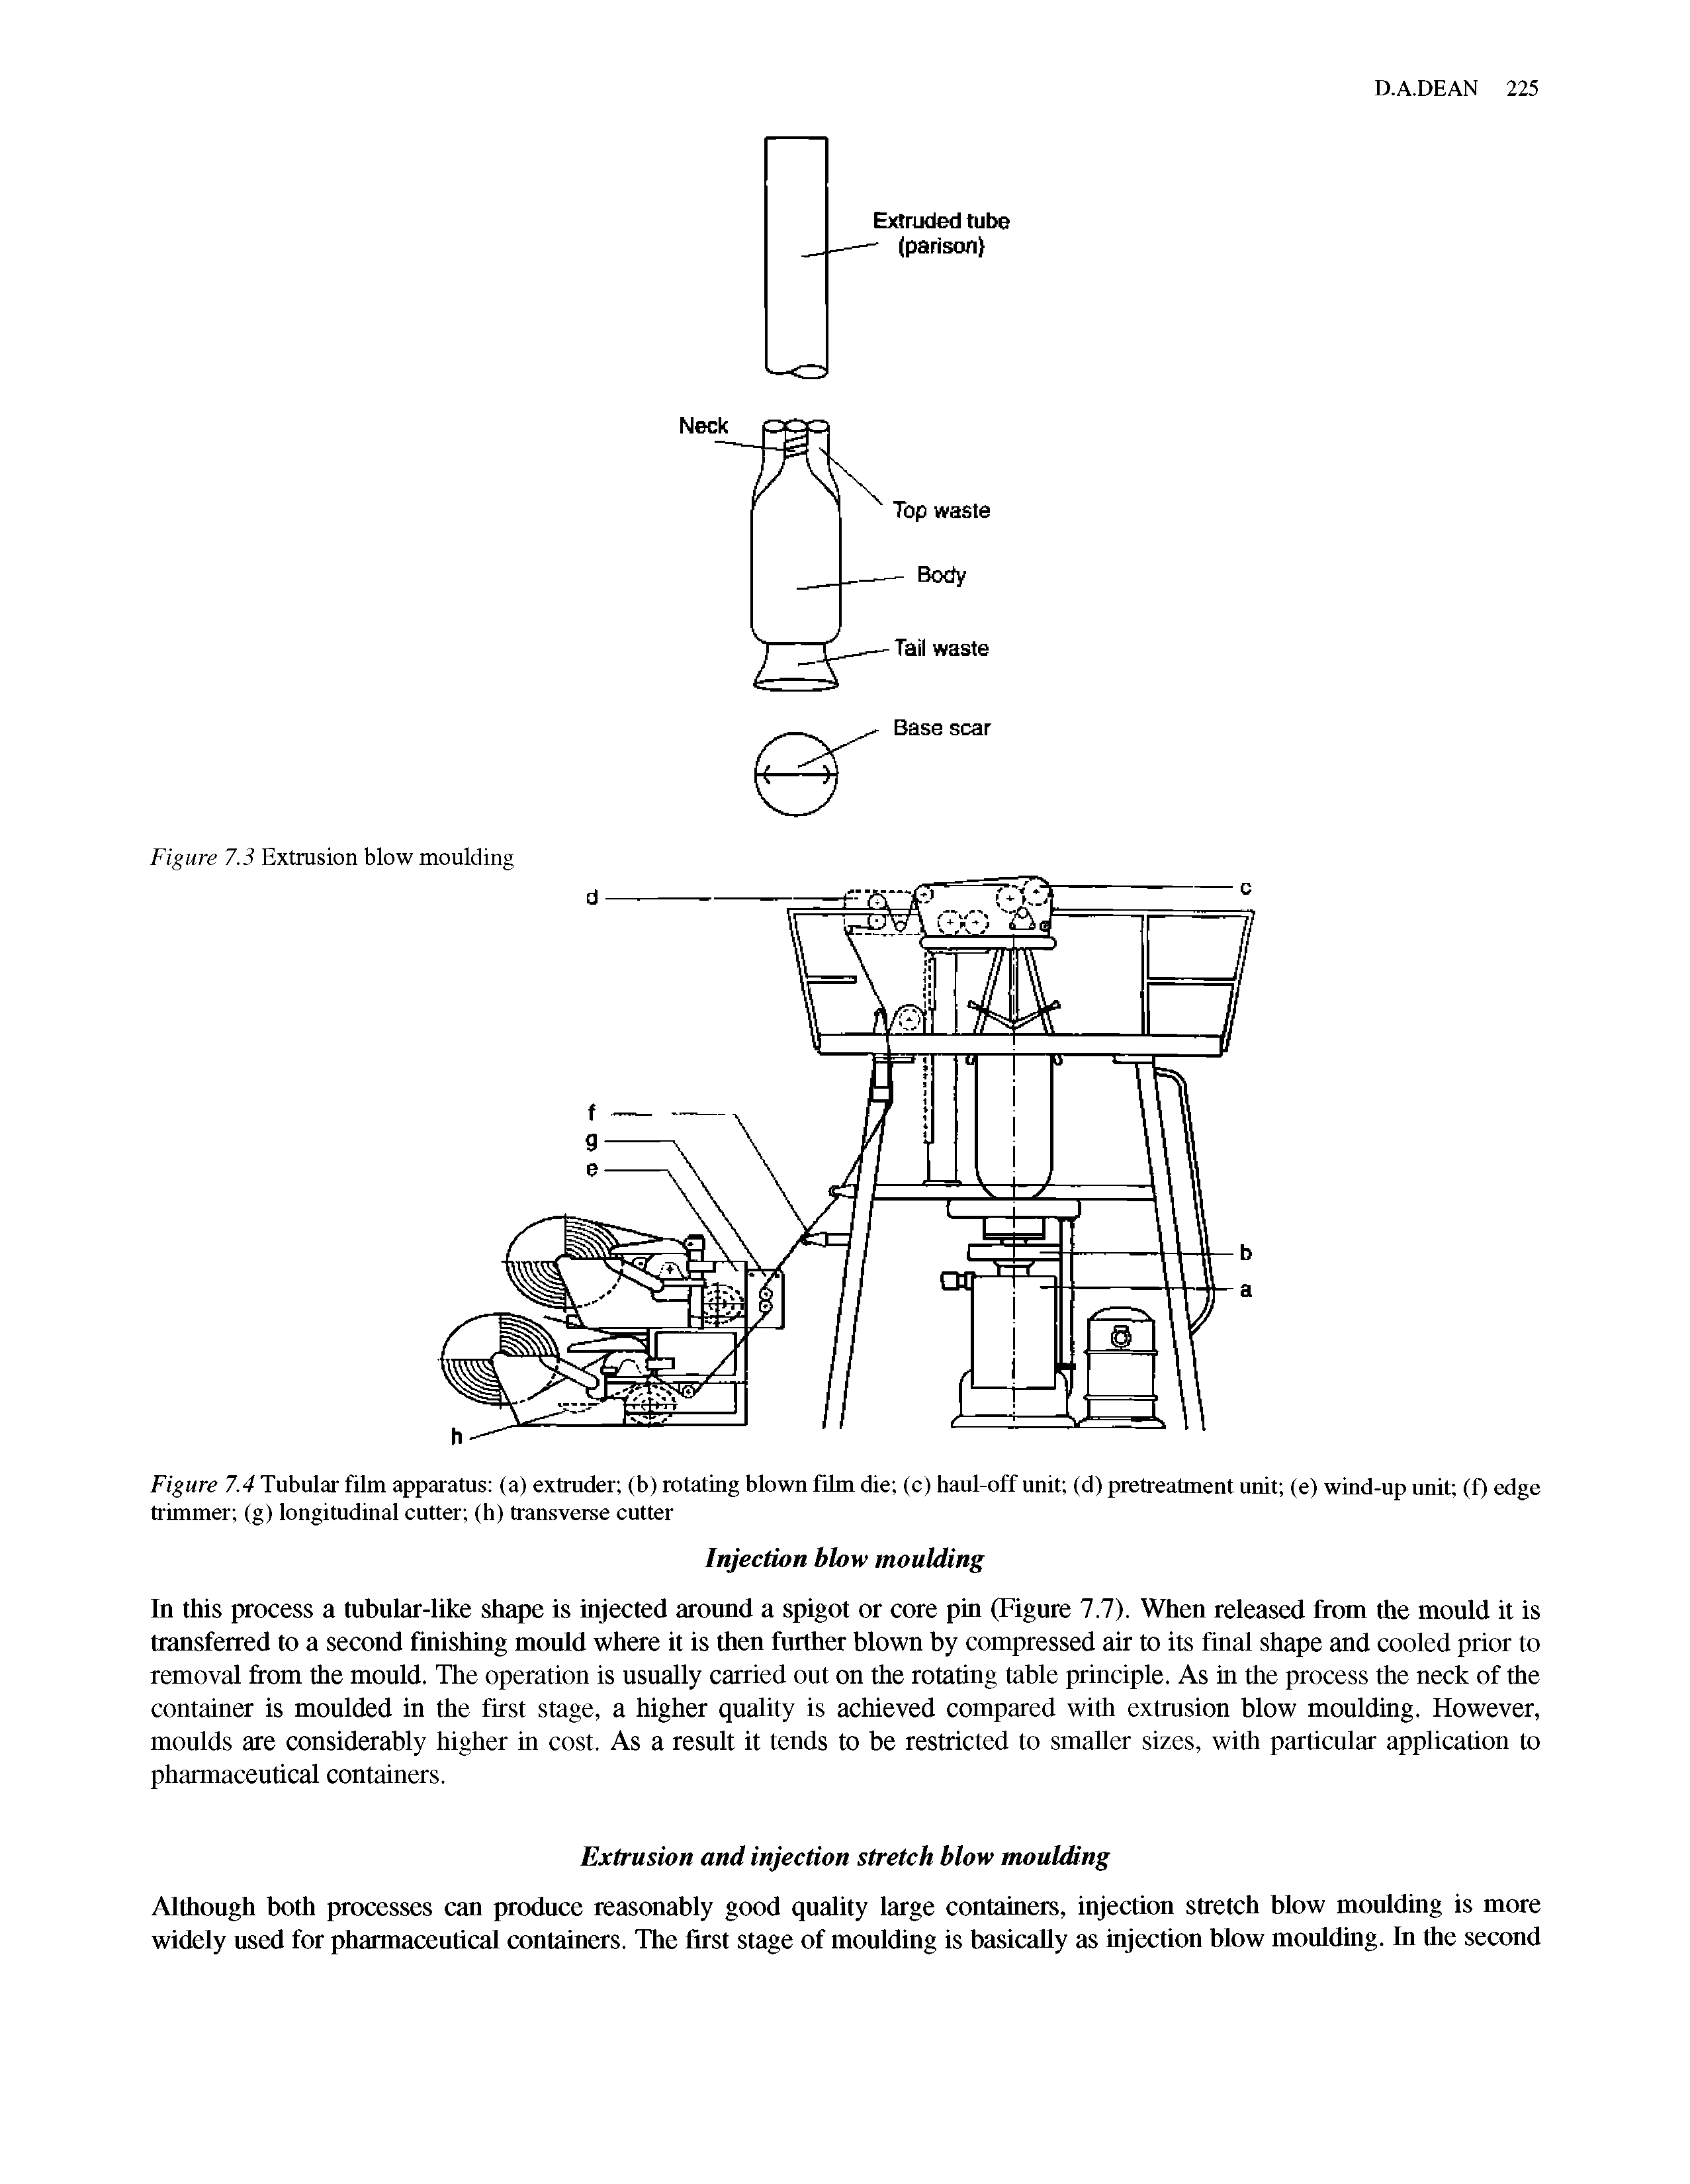 Figure 7.4 Tubular film apparatus (a) extruder (b) rotating blown film die (c) haul-off unit (d) pretreatment unit (e) wind-up unit (f) edge trimmer (g) longitudinal cutter (h) transverse cutter...